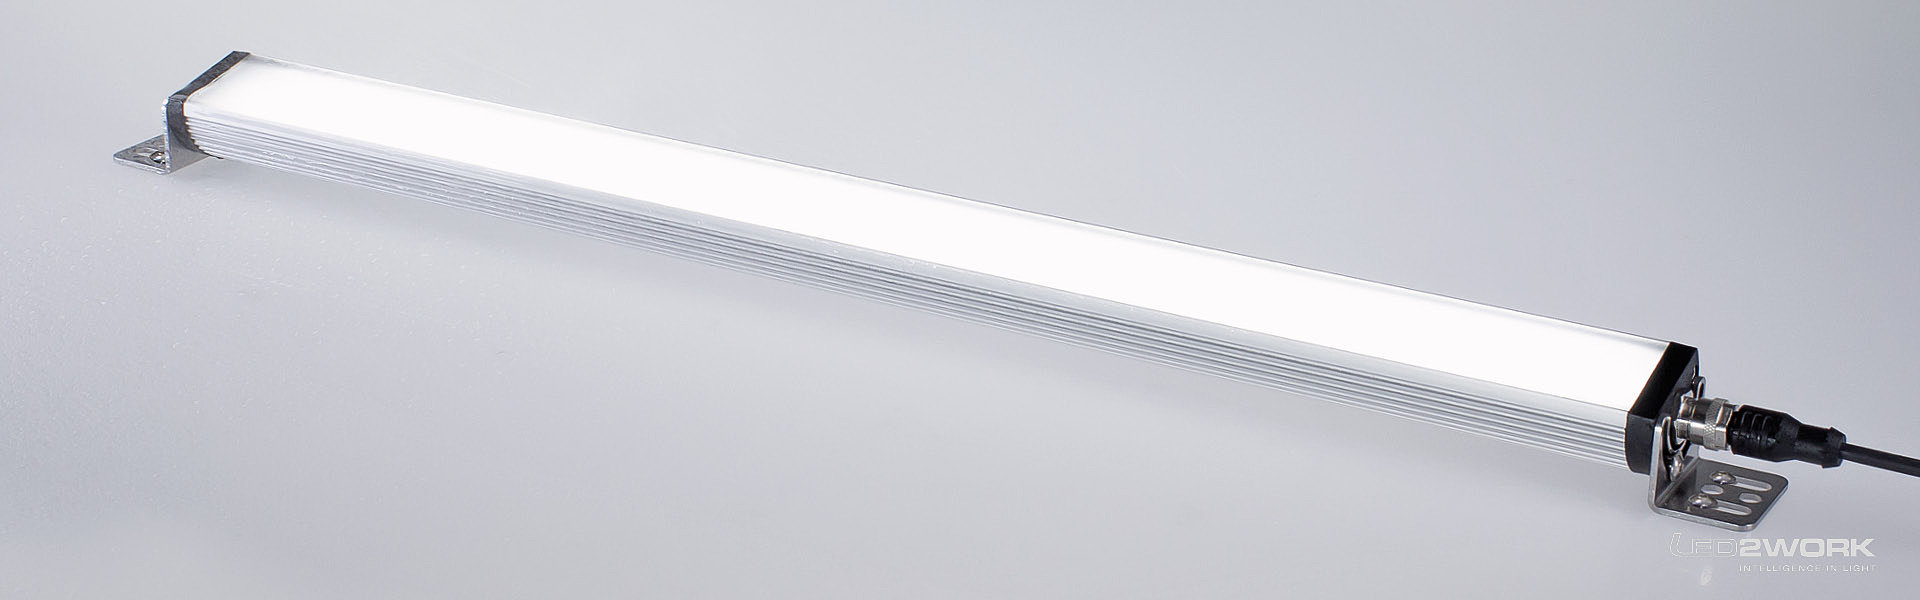 LED industrial light | LED machine light | TUBELED_40 element | Led2work | slider image